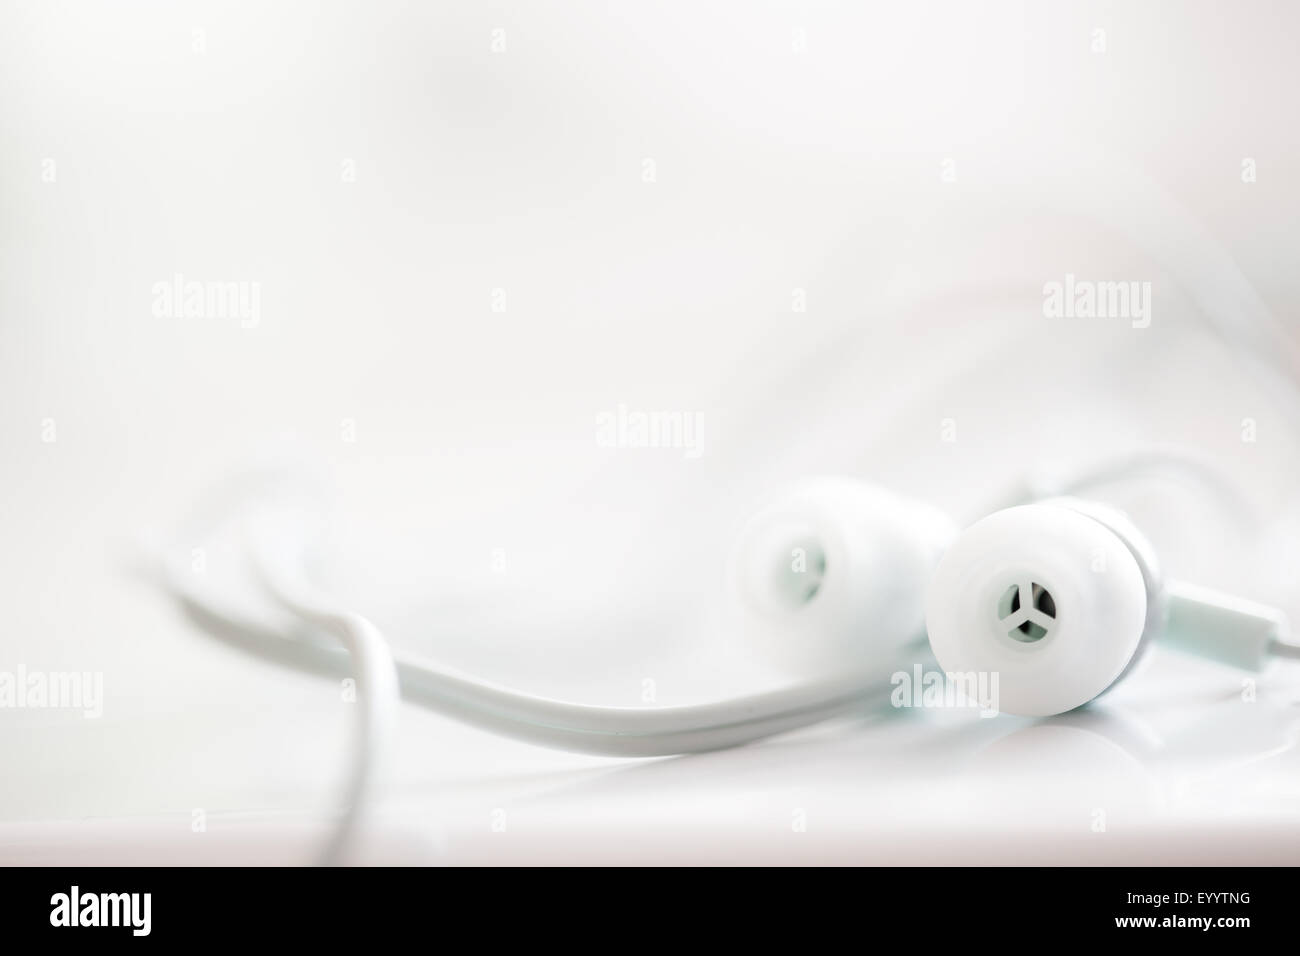 White earphones, close up photo, small dof Stock Photo